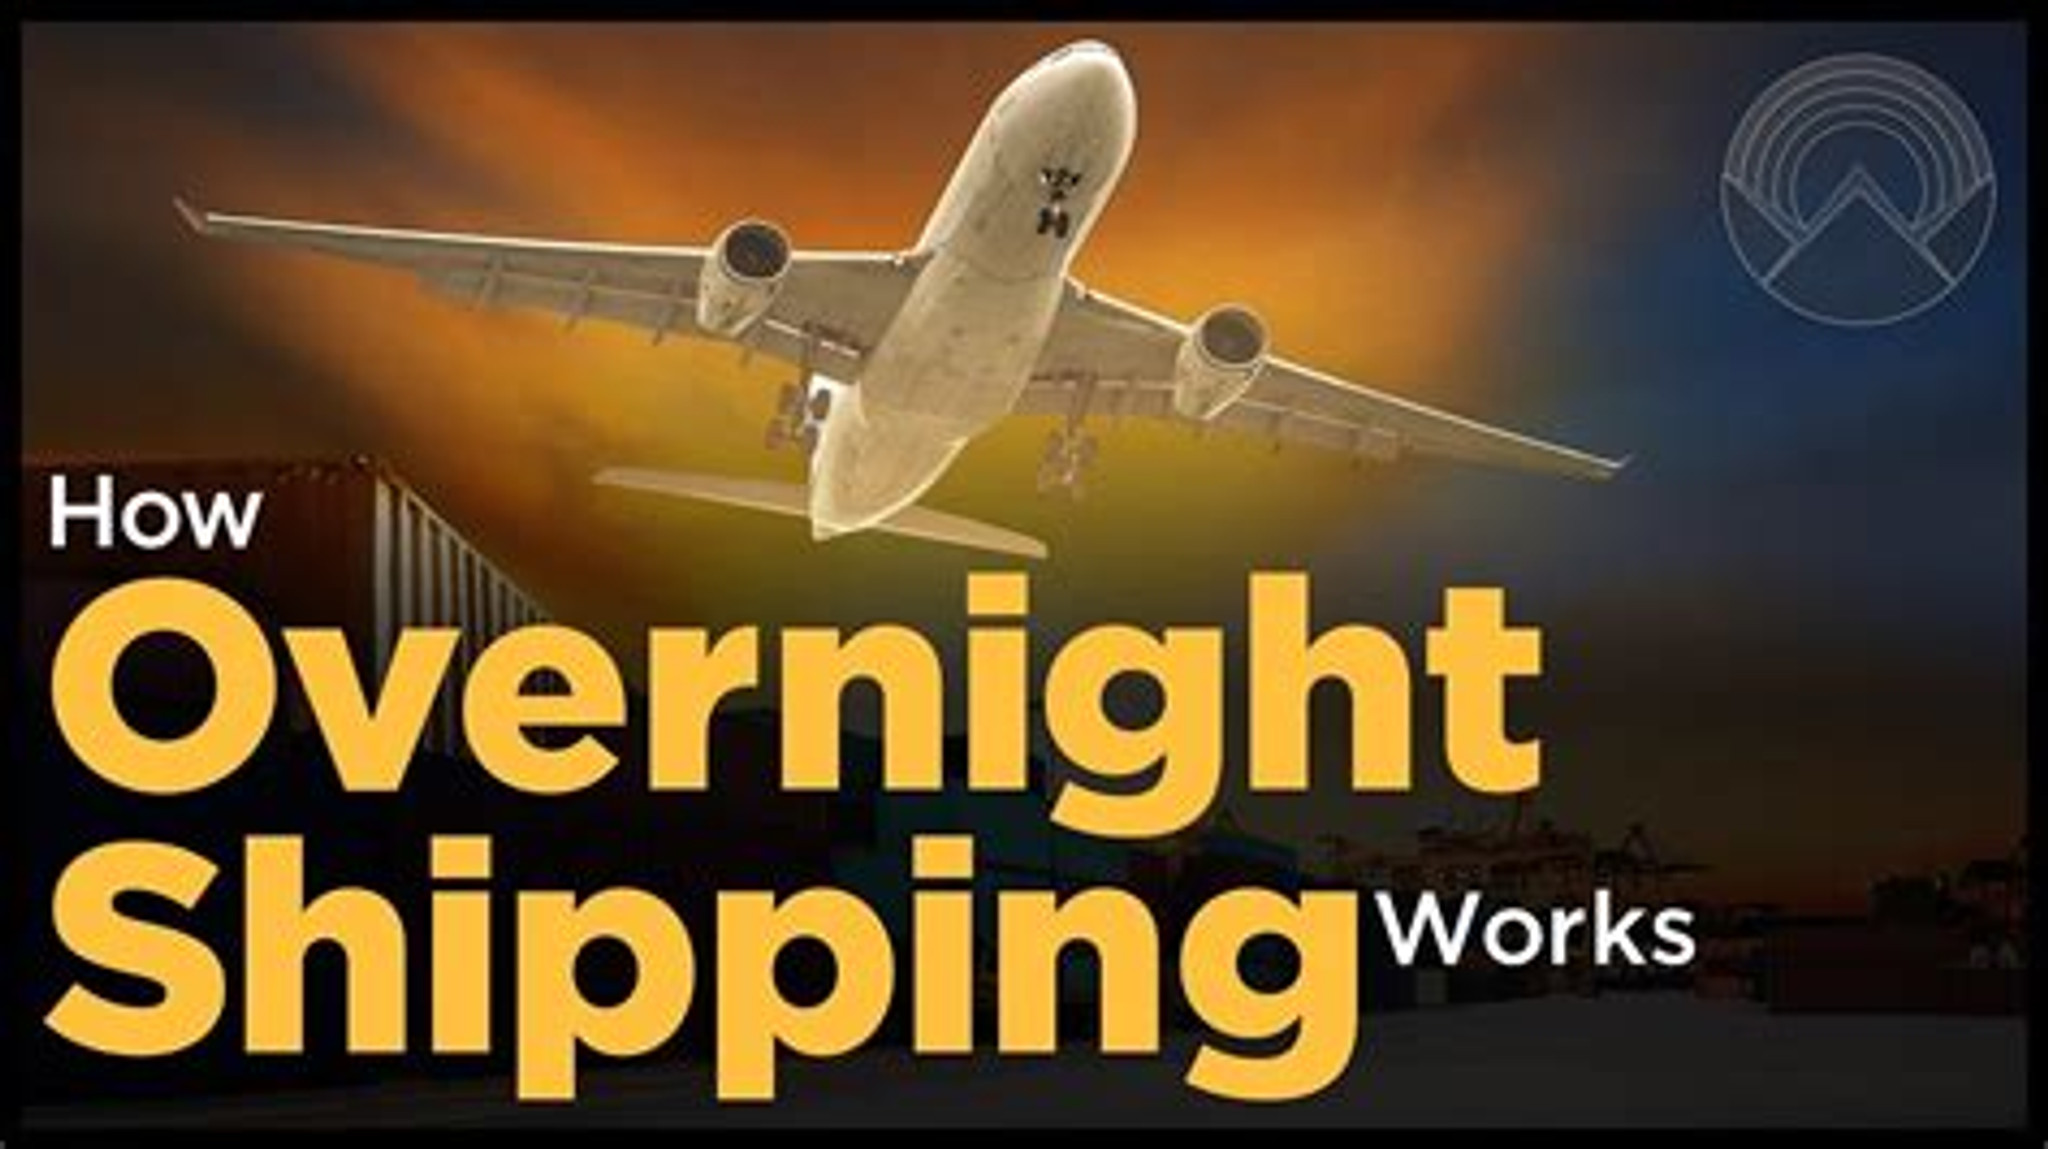 Overnight Shipping - SpyGadgets4Sale